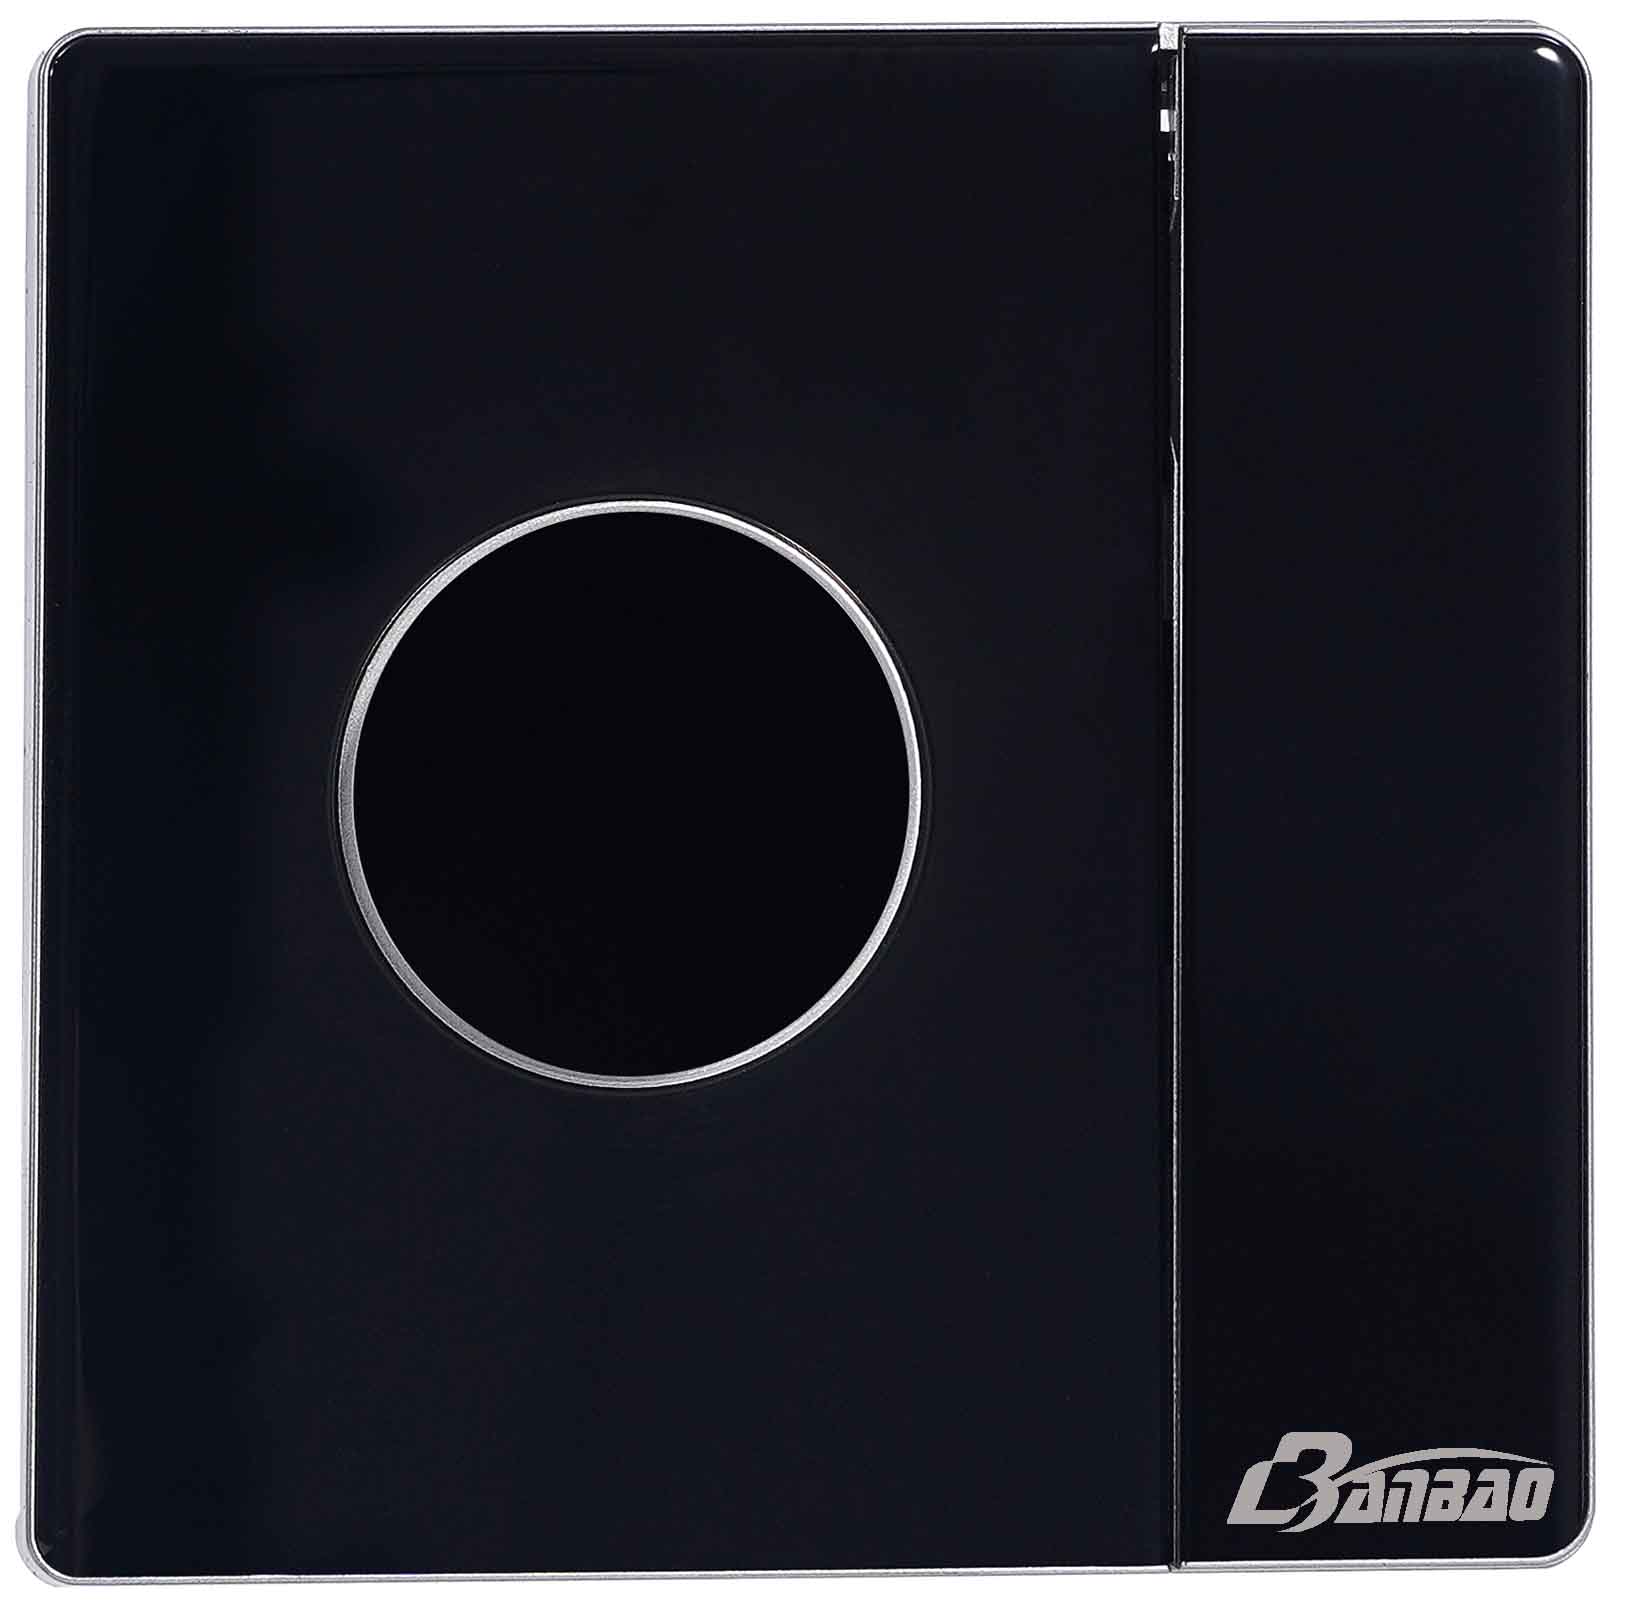 Big Button 2 +3pin wall socket Black color Glass panel